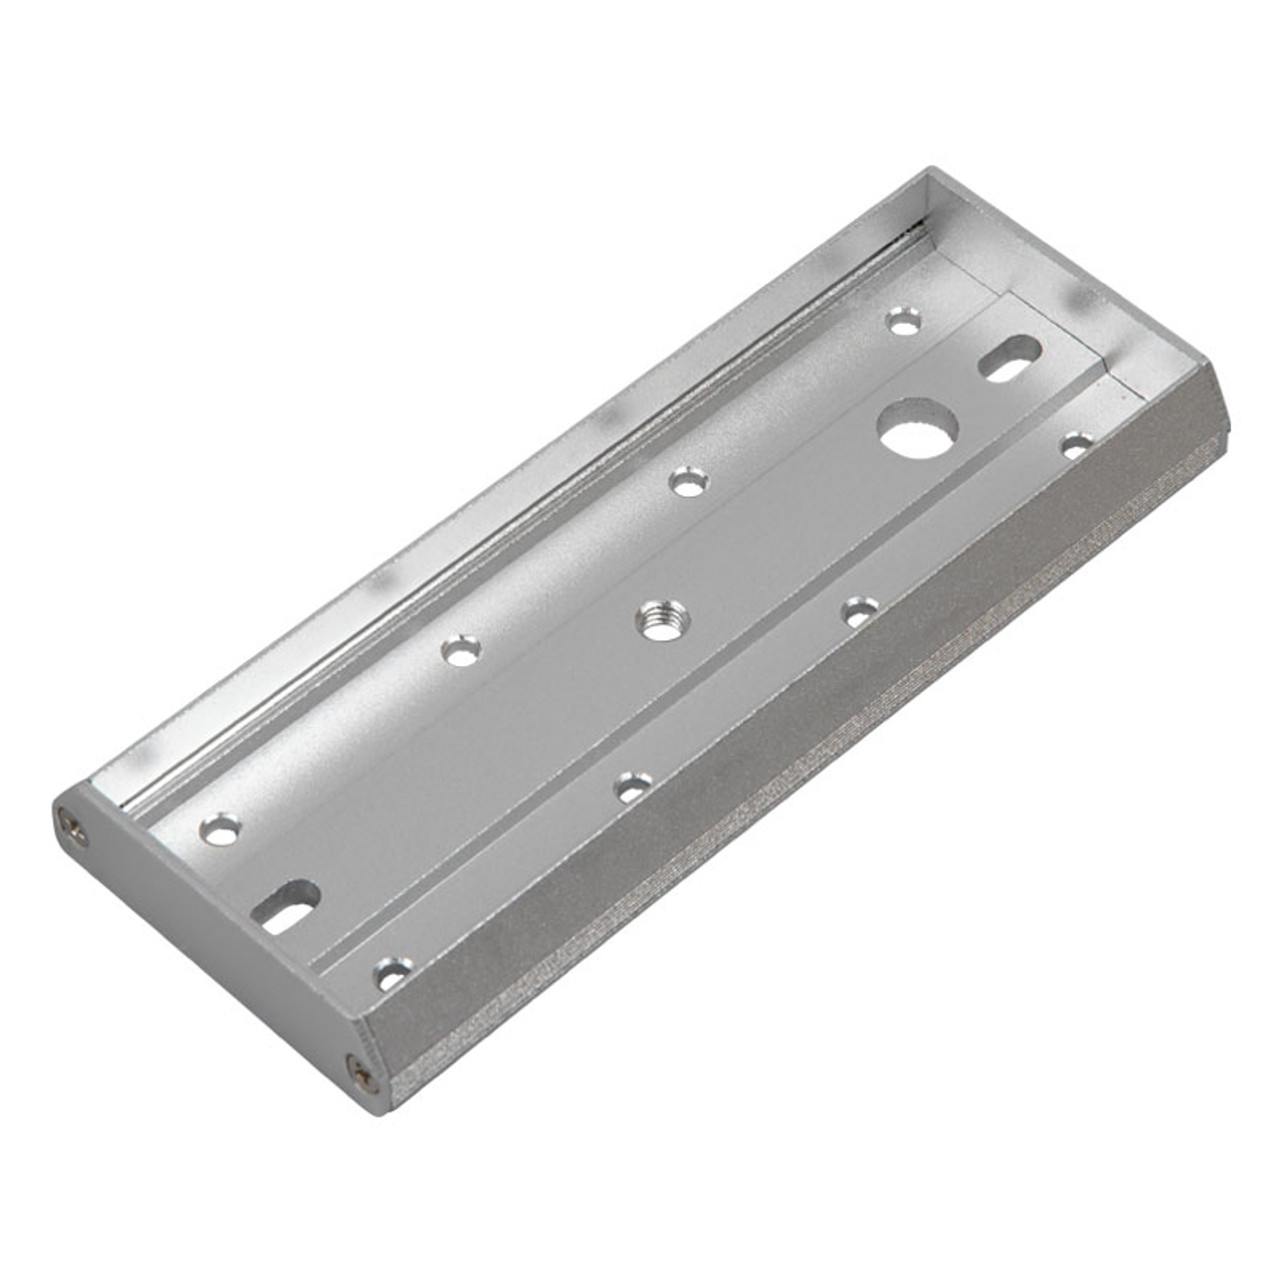 Aluminium Armature Housing for 1200lb Magnets - Multiple Fixing Holes